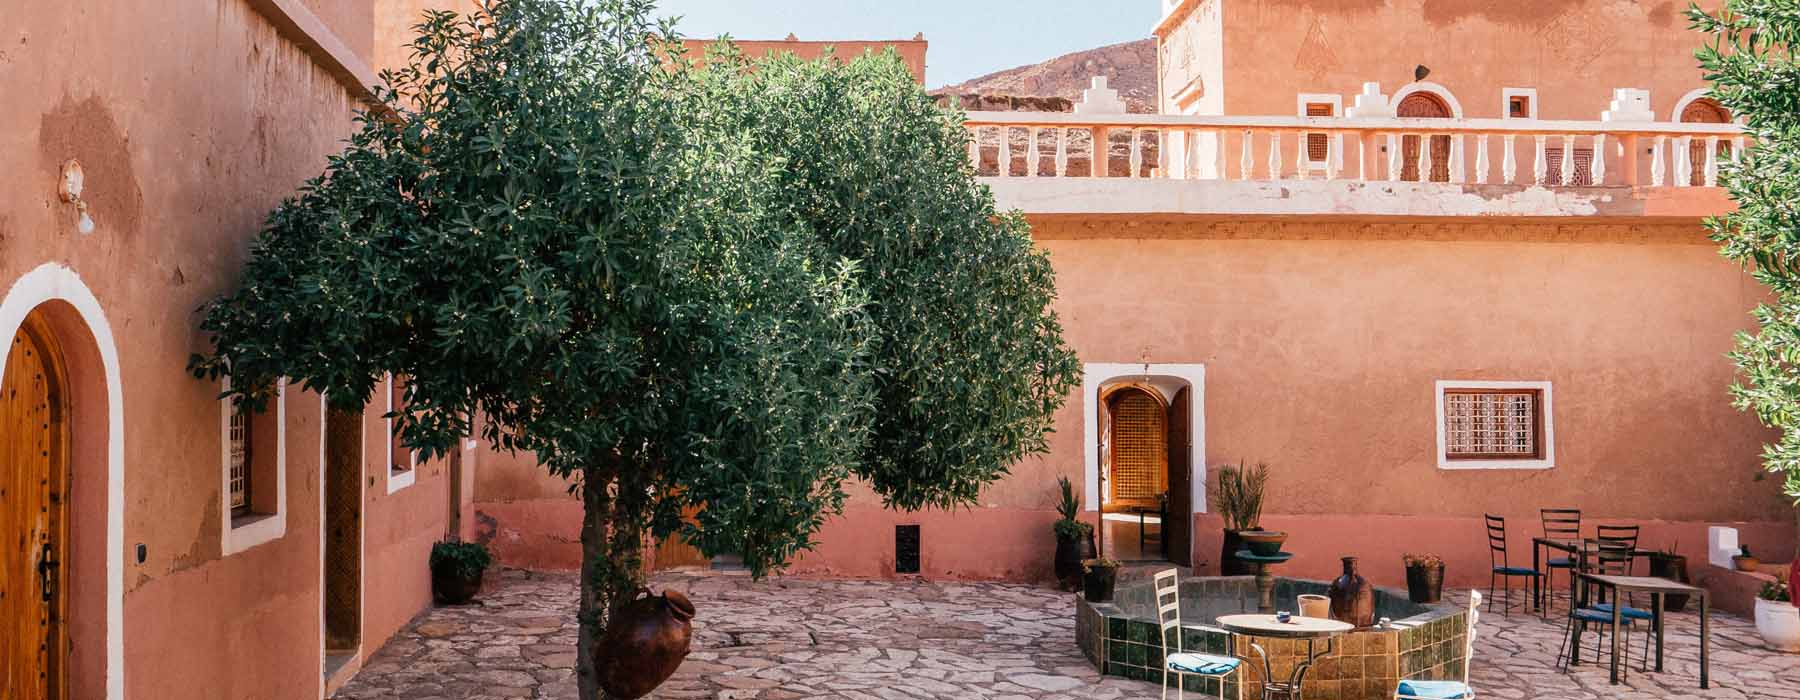 All our Morocco<br class="hidden-md hidden-lg" /> Luxury Holidays